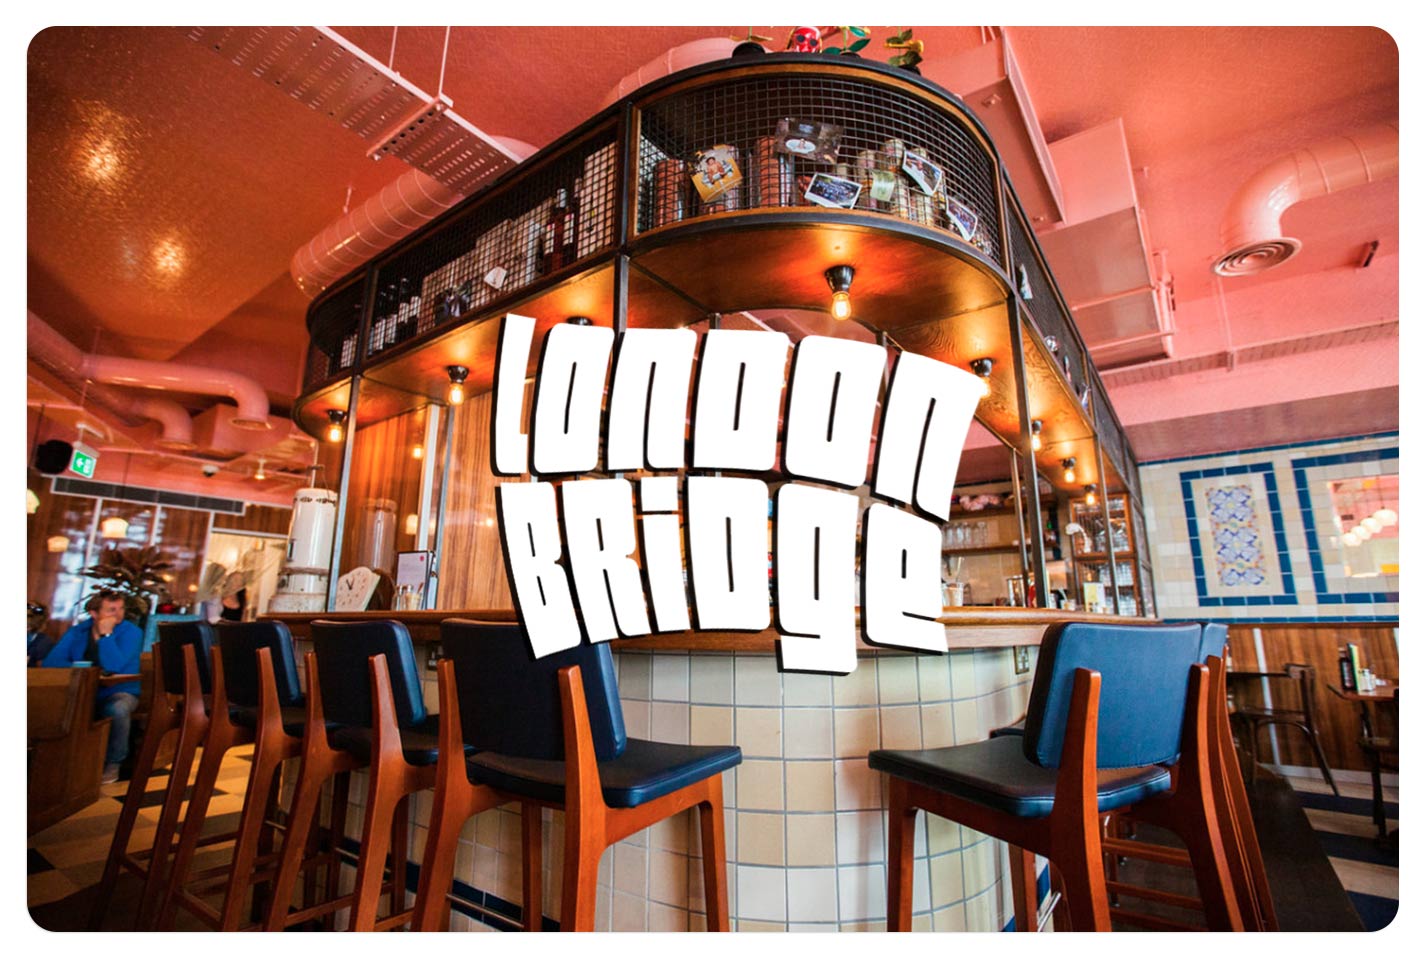 London Bridge - The Breakfast Club